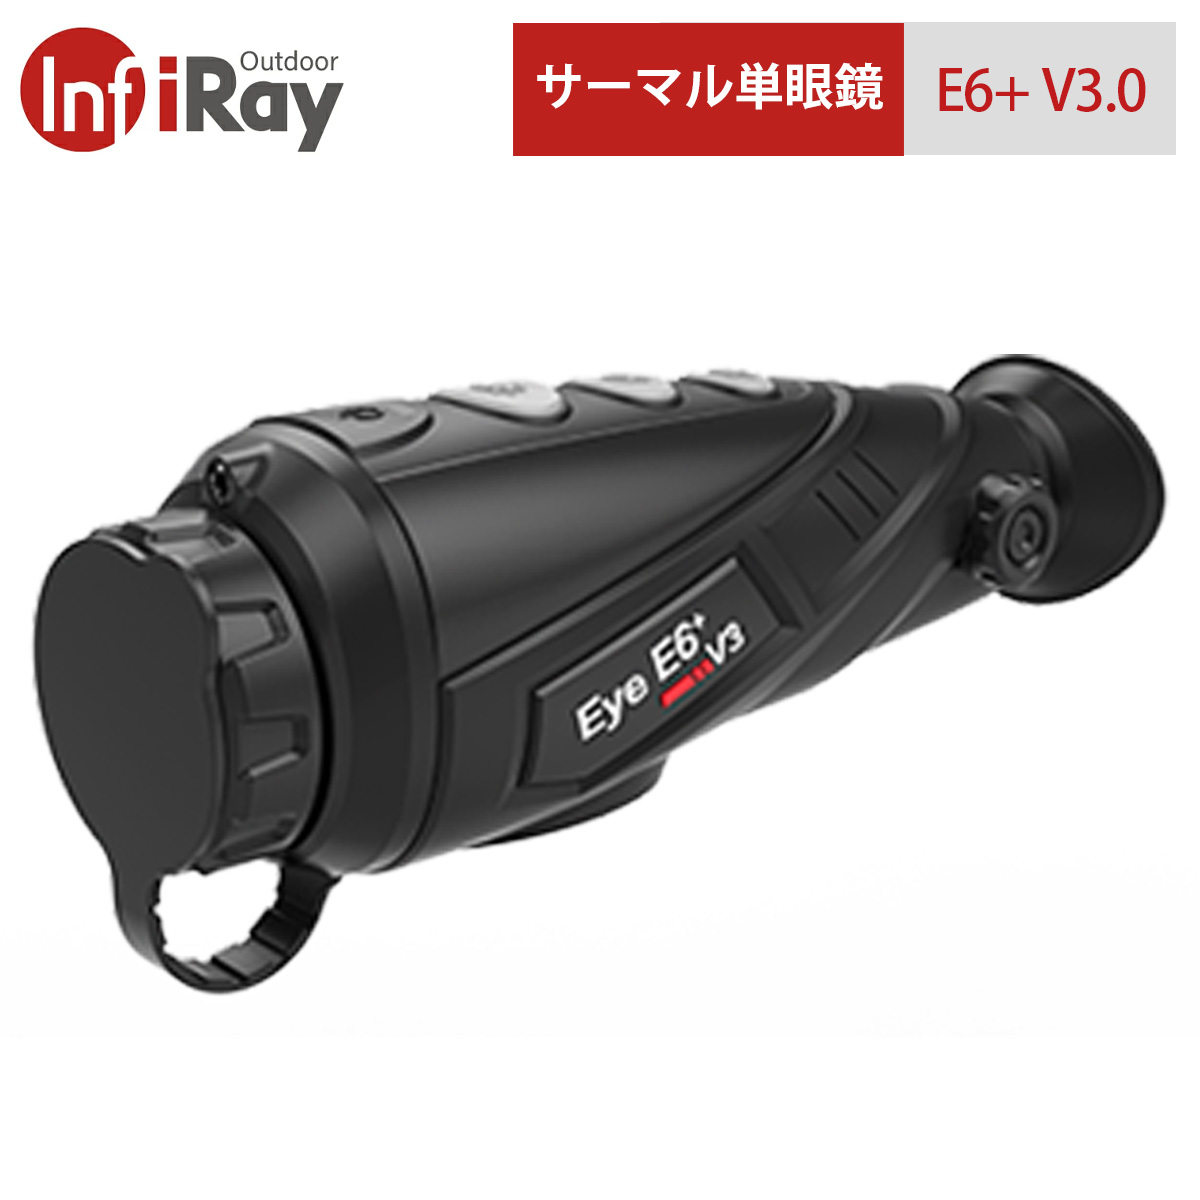 IRAY サーマル単眼鏡 EyeIIシリーズ E3Max V2.0